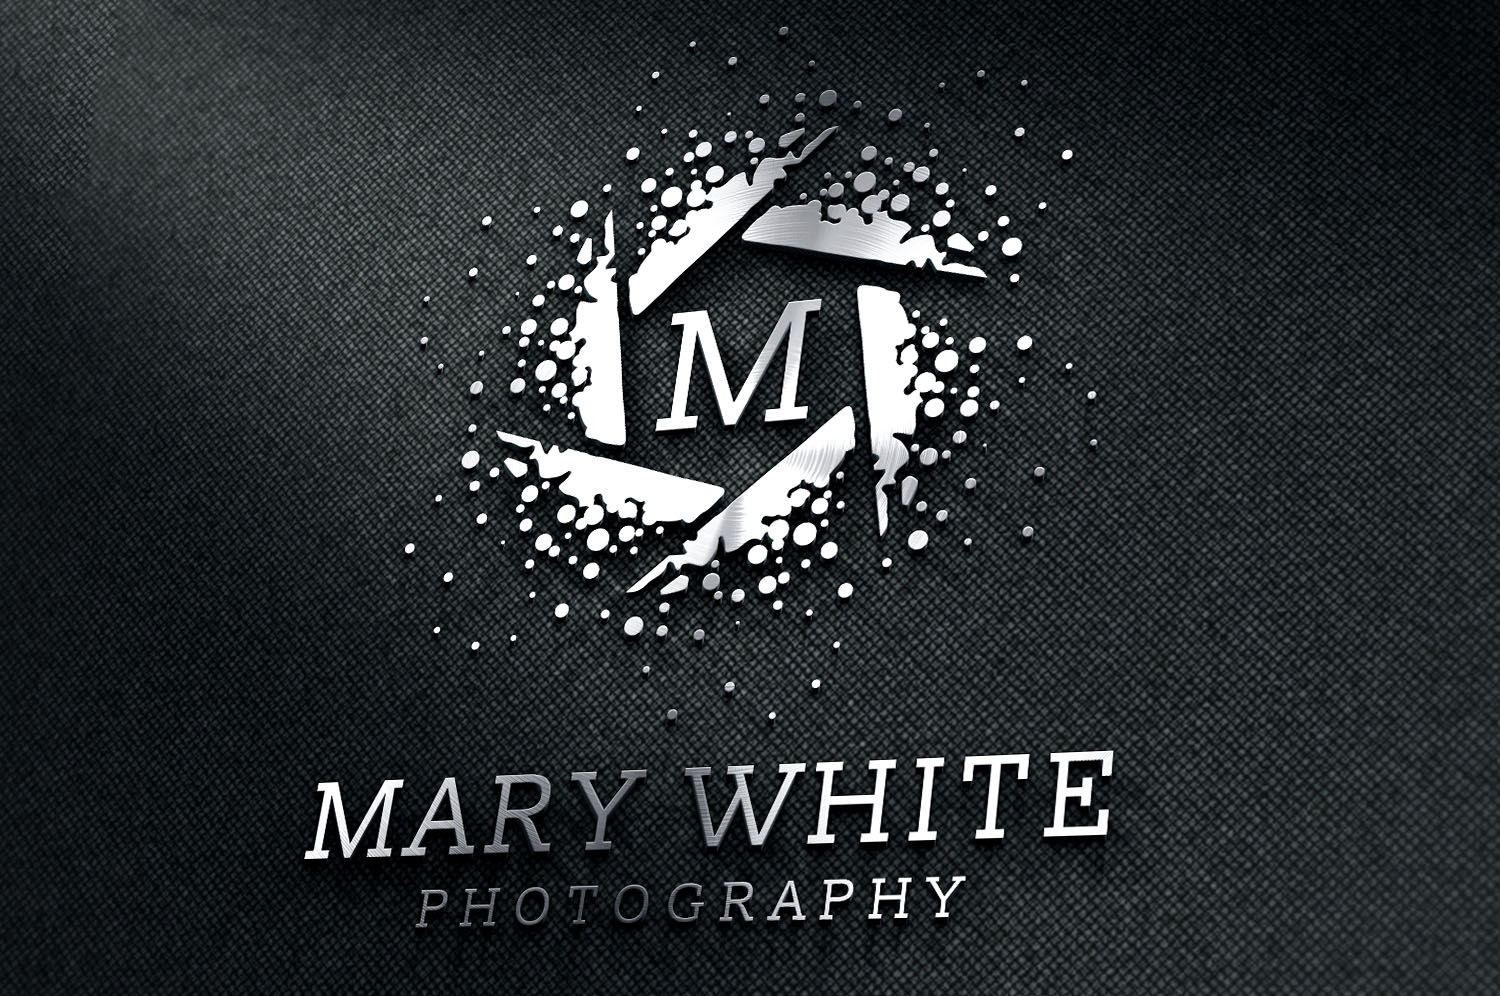 photography business logo ideas